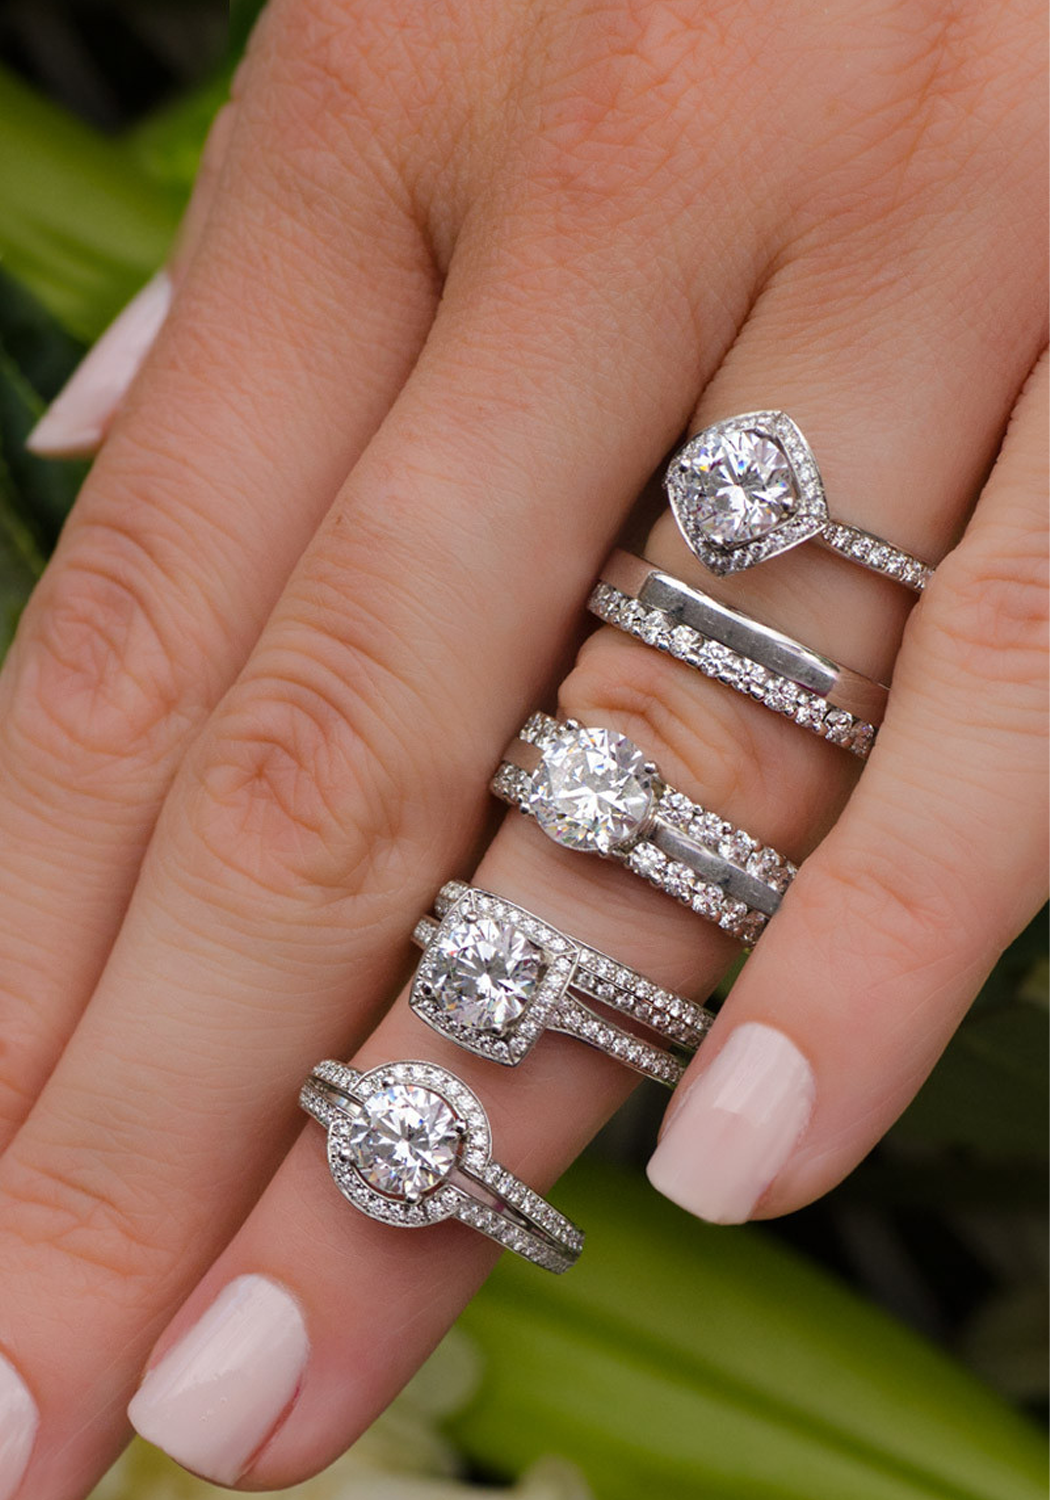 Furrer Jacot Diamond Engagement Rings & Wedding Bands (Sold separatelt) | OsterJewelers.com